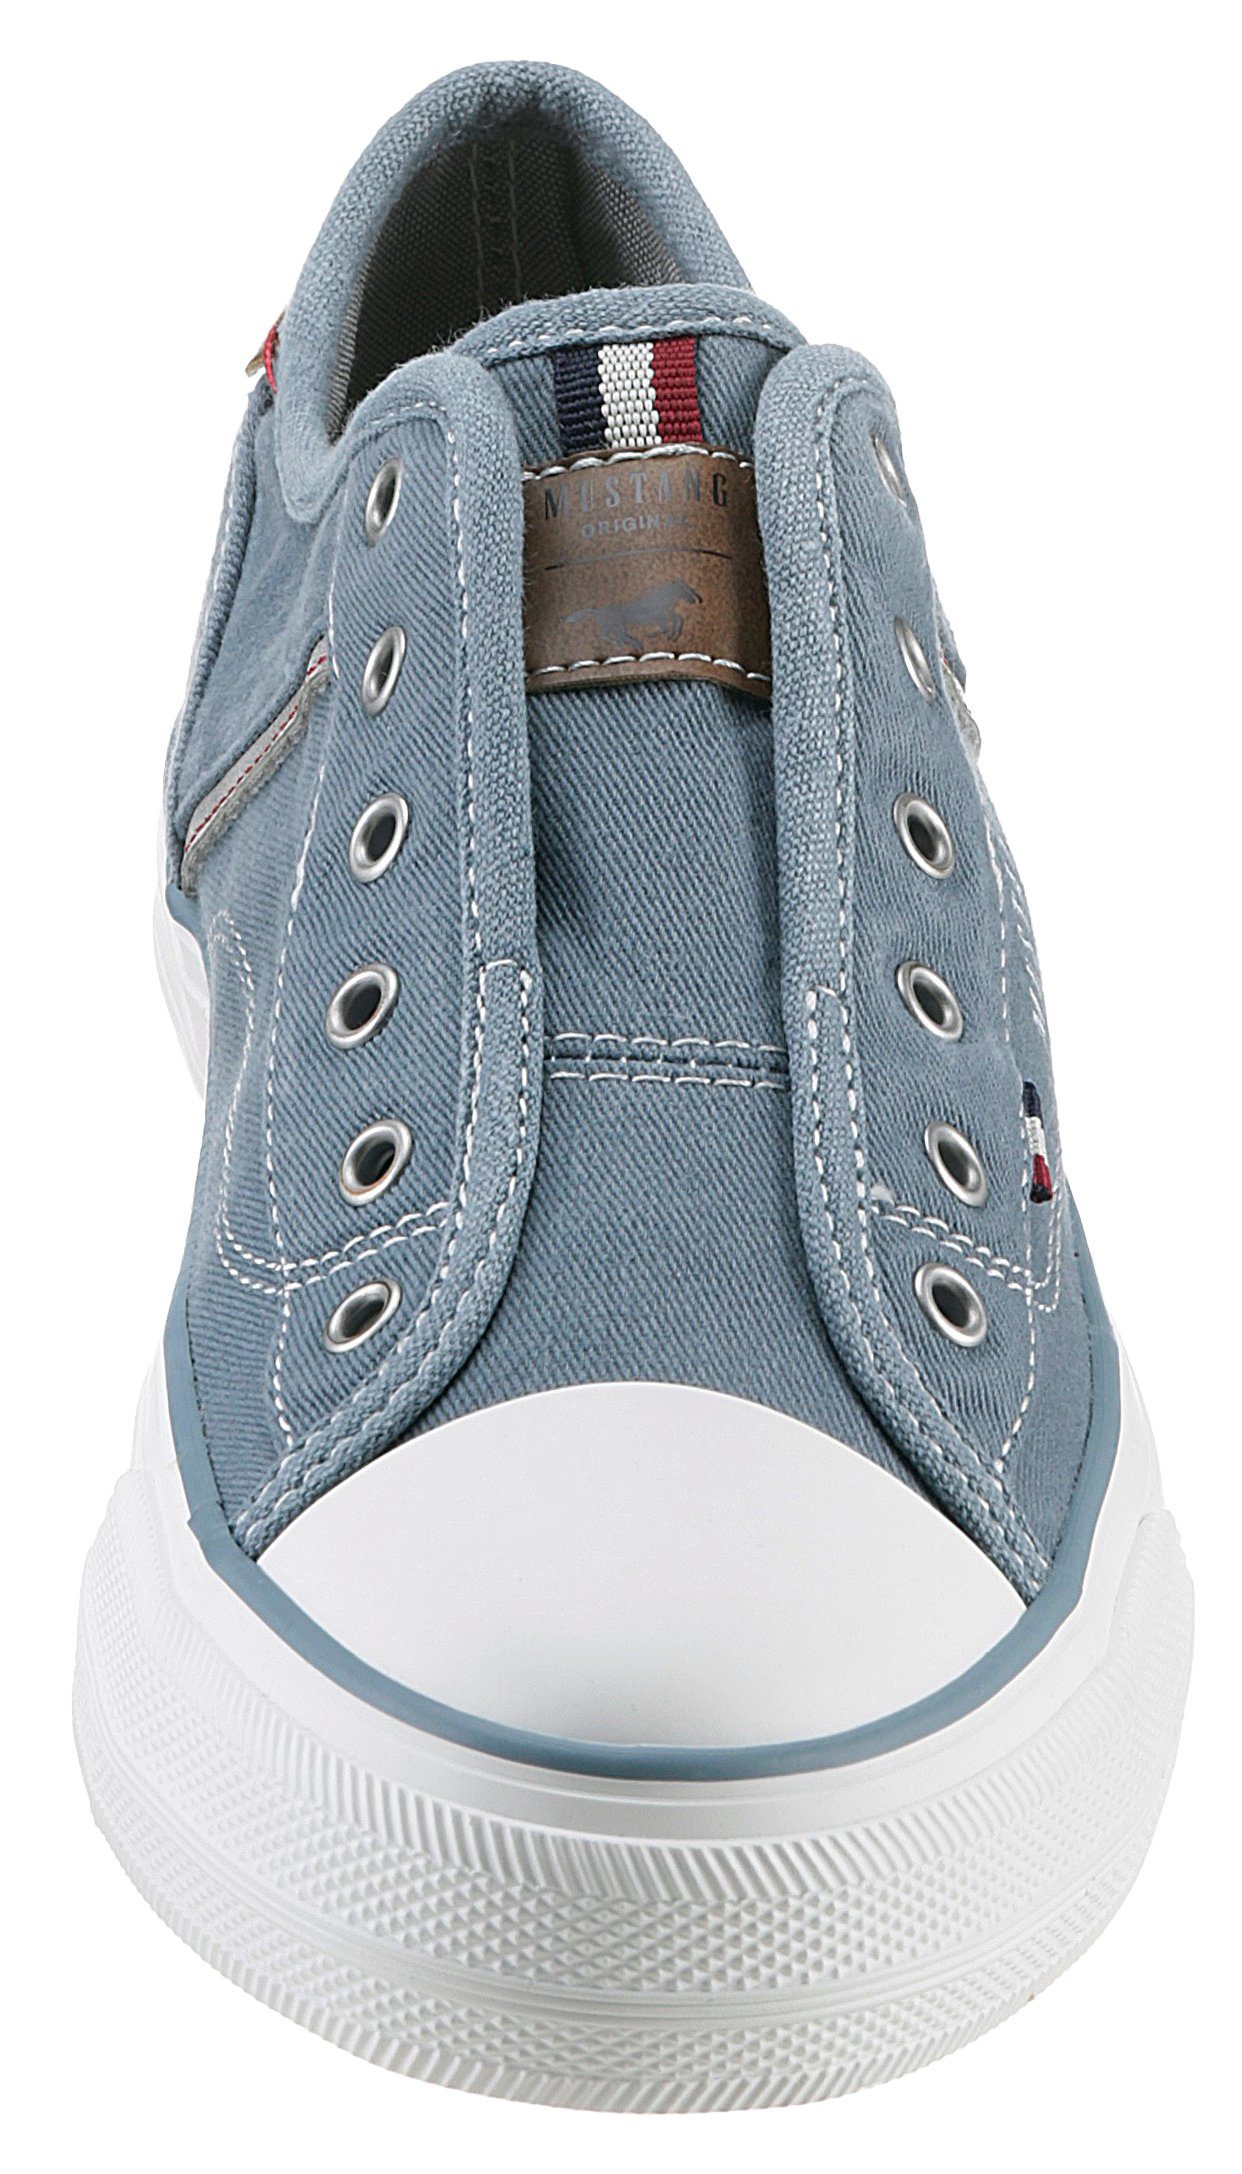 Slip-On Mustang Gummizug jeansblau praktischem Shoes mit Sneaker